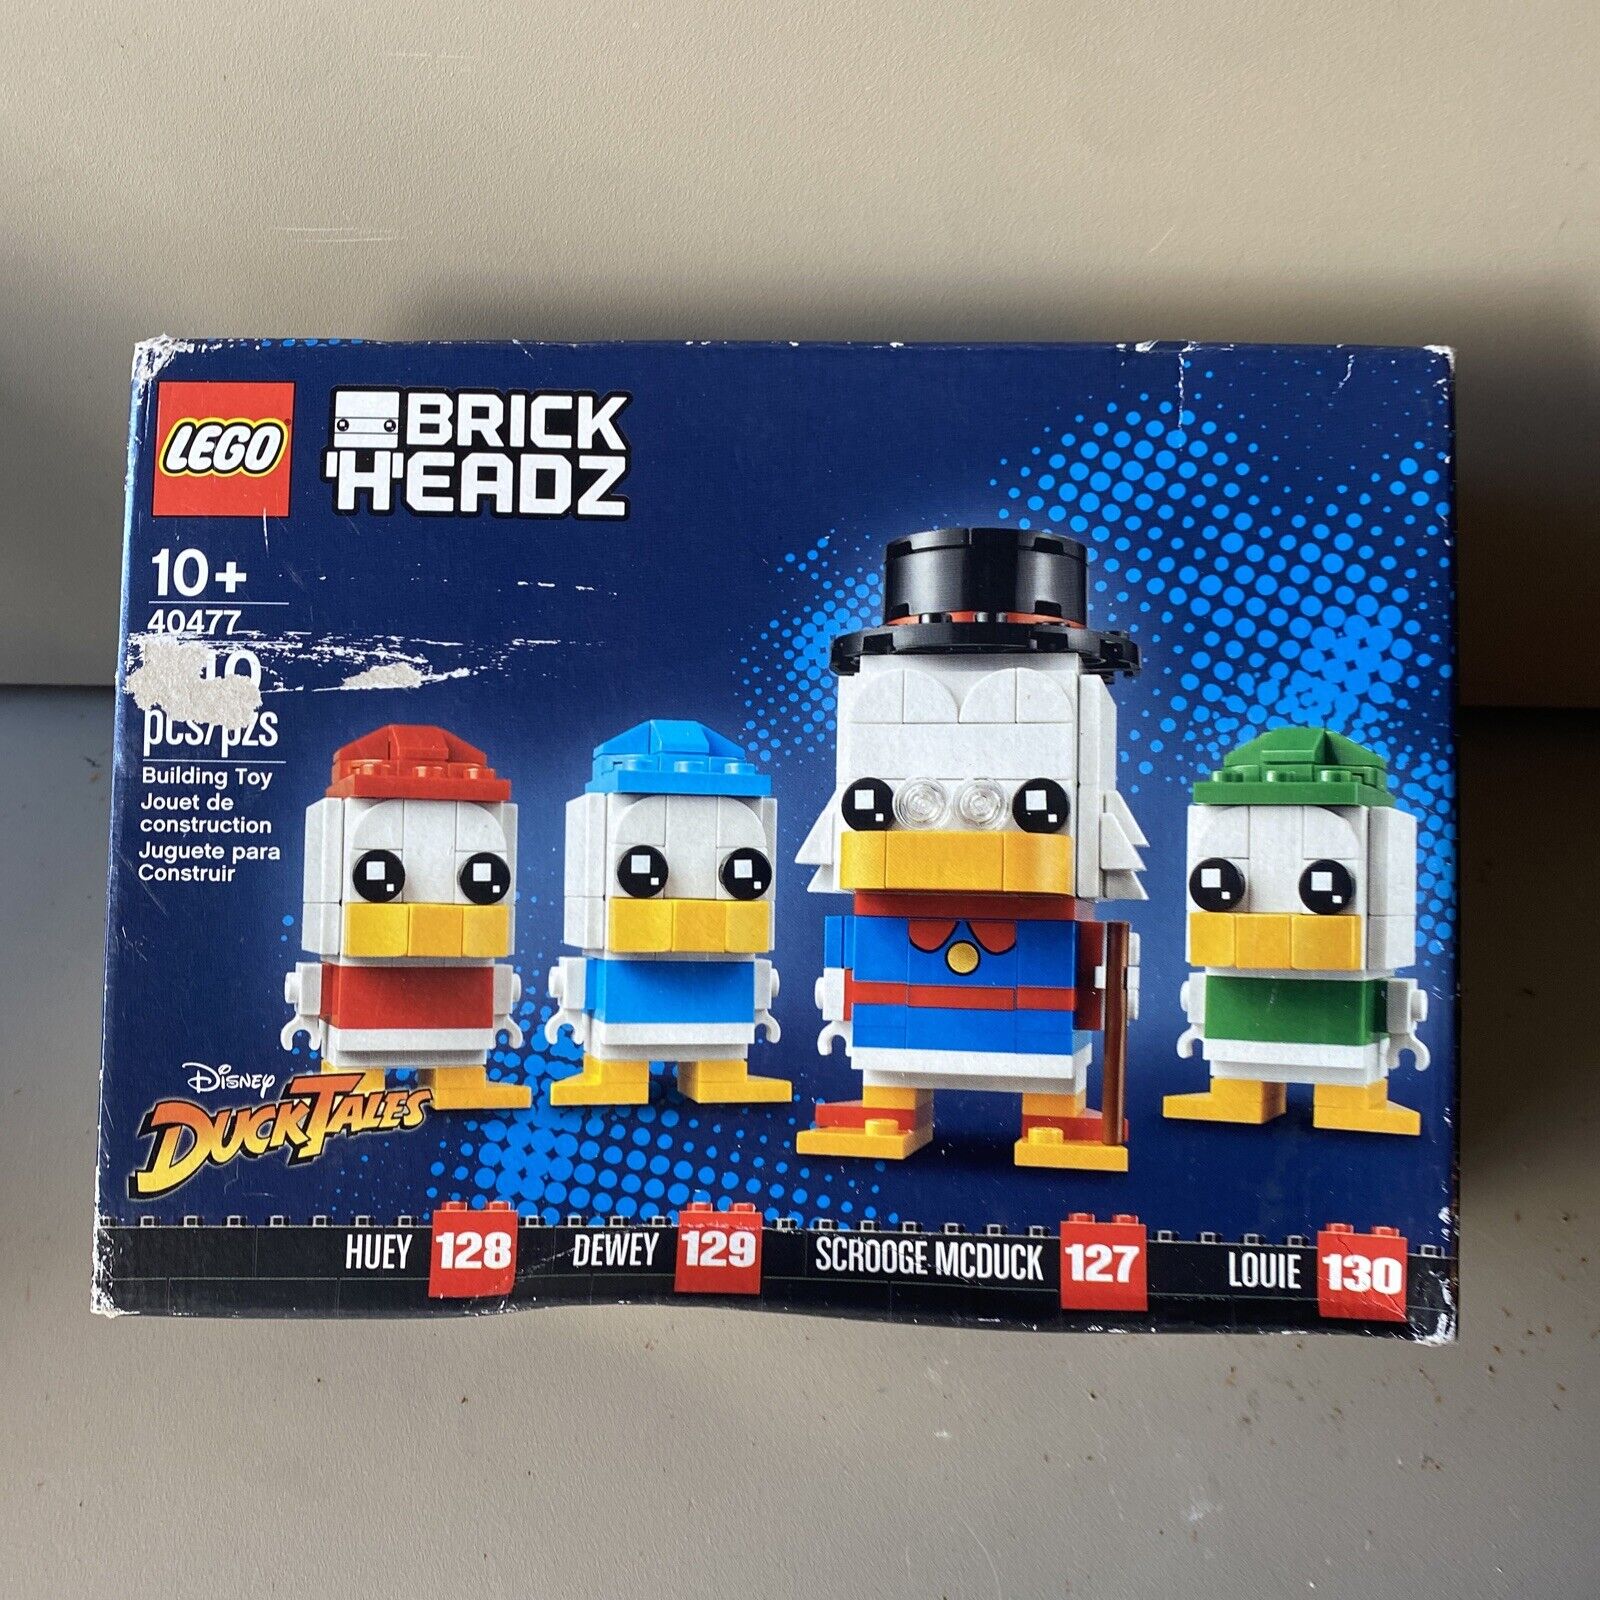 LEGO Brick Headz # 40477 Scrooge McDuck, Huey, Dewey & Louie Some Box Damage